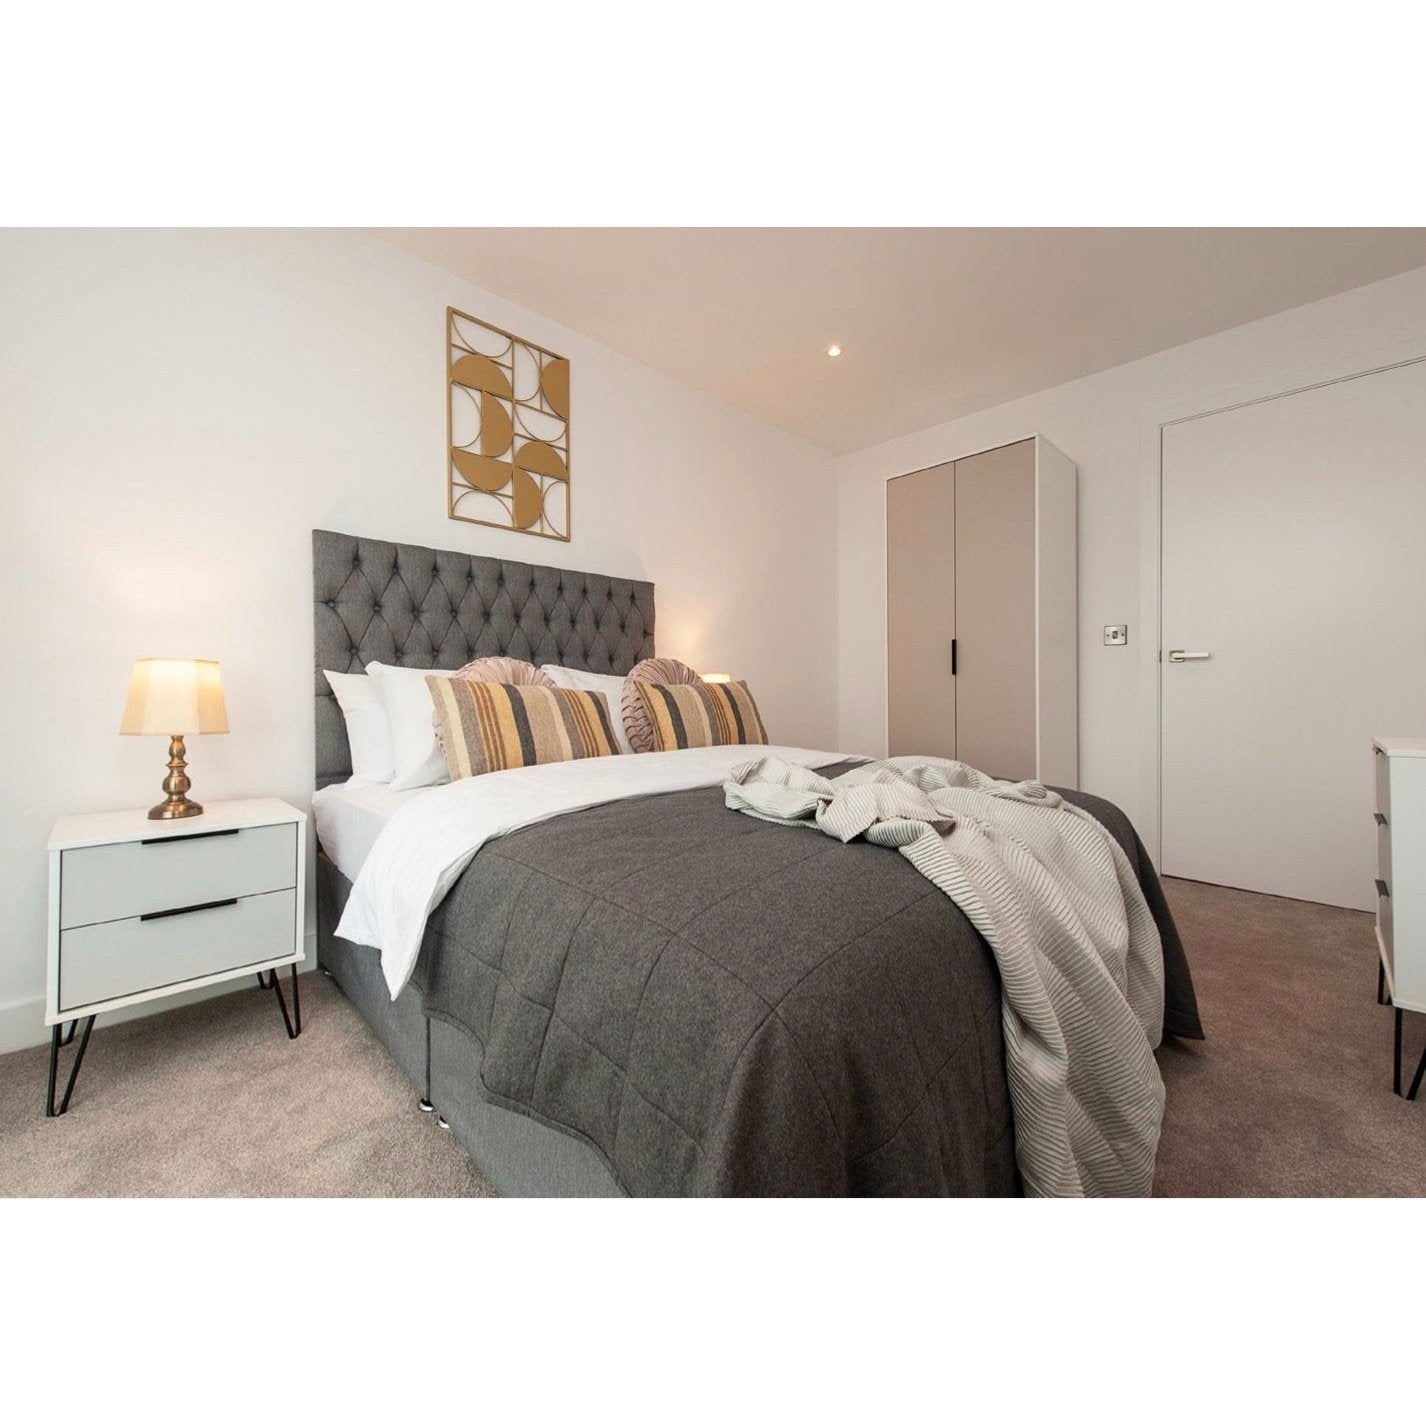 Oakwood furniture package - bedroom two | Manor Interiors